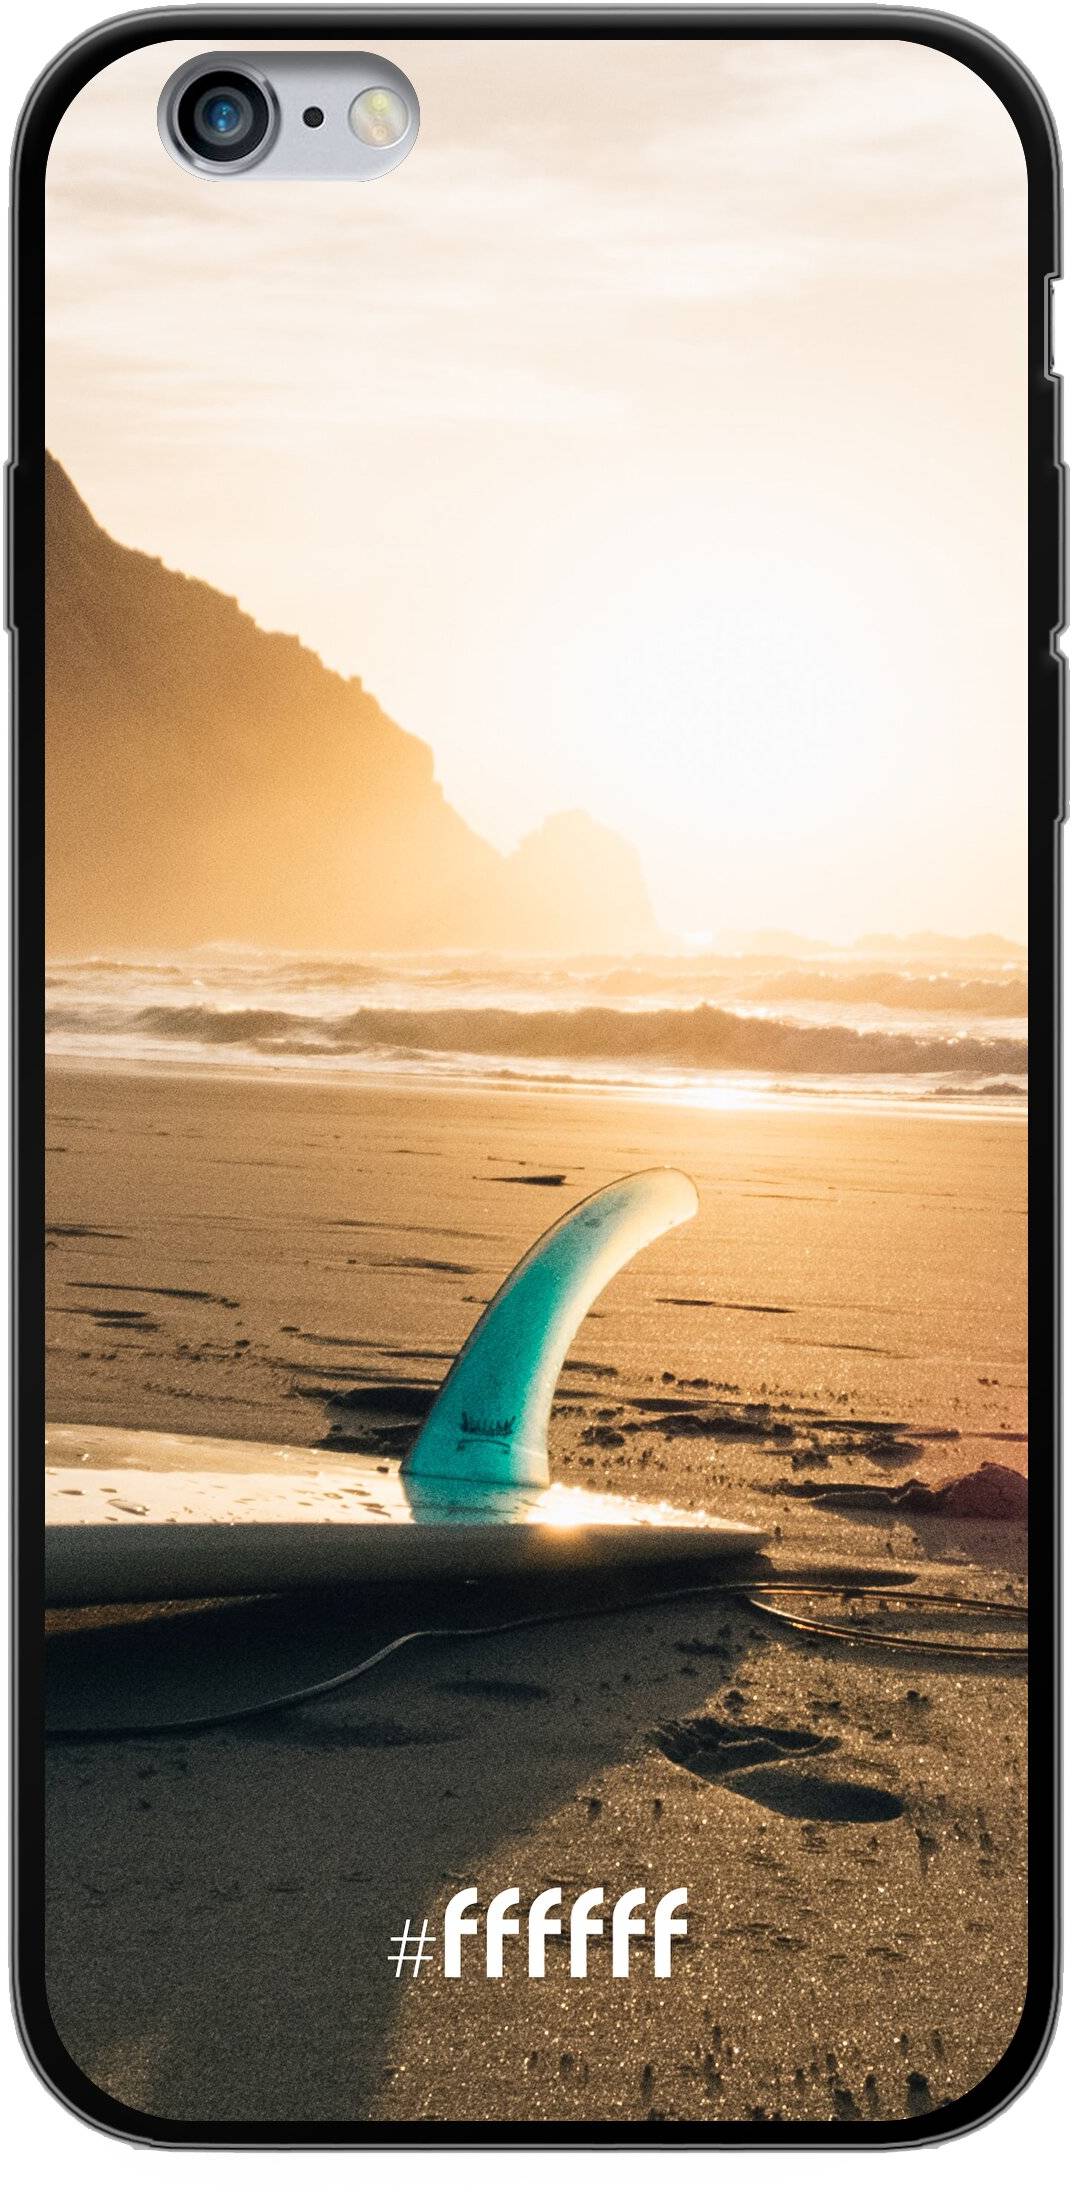 Sunset Surf iPhone 6s